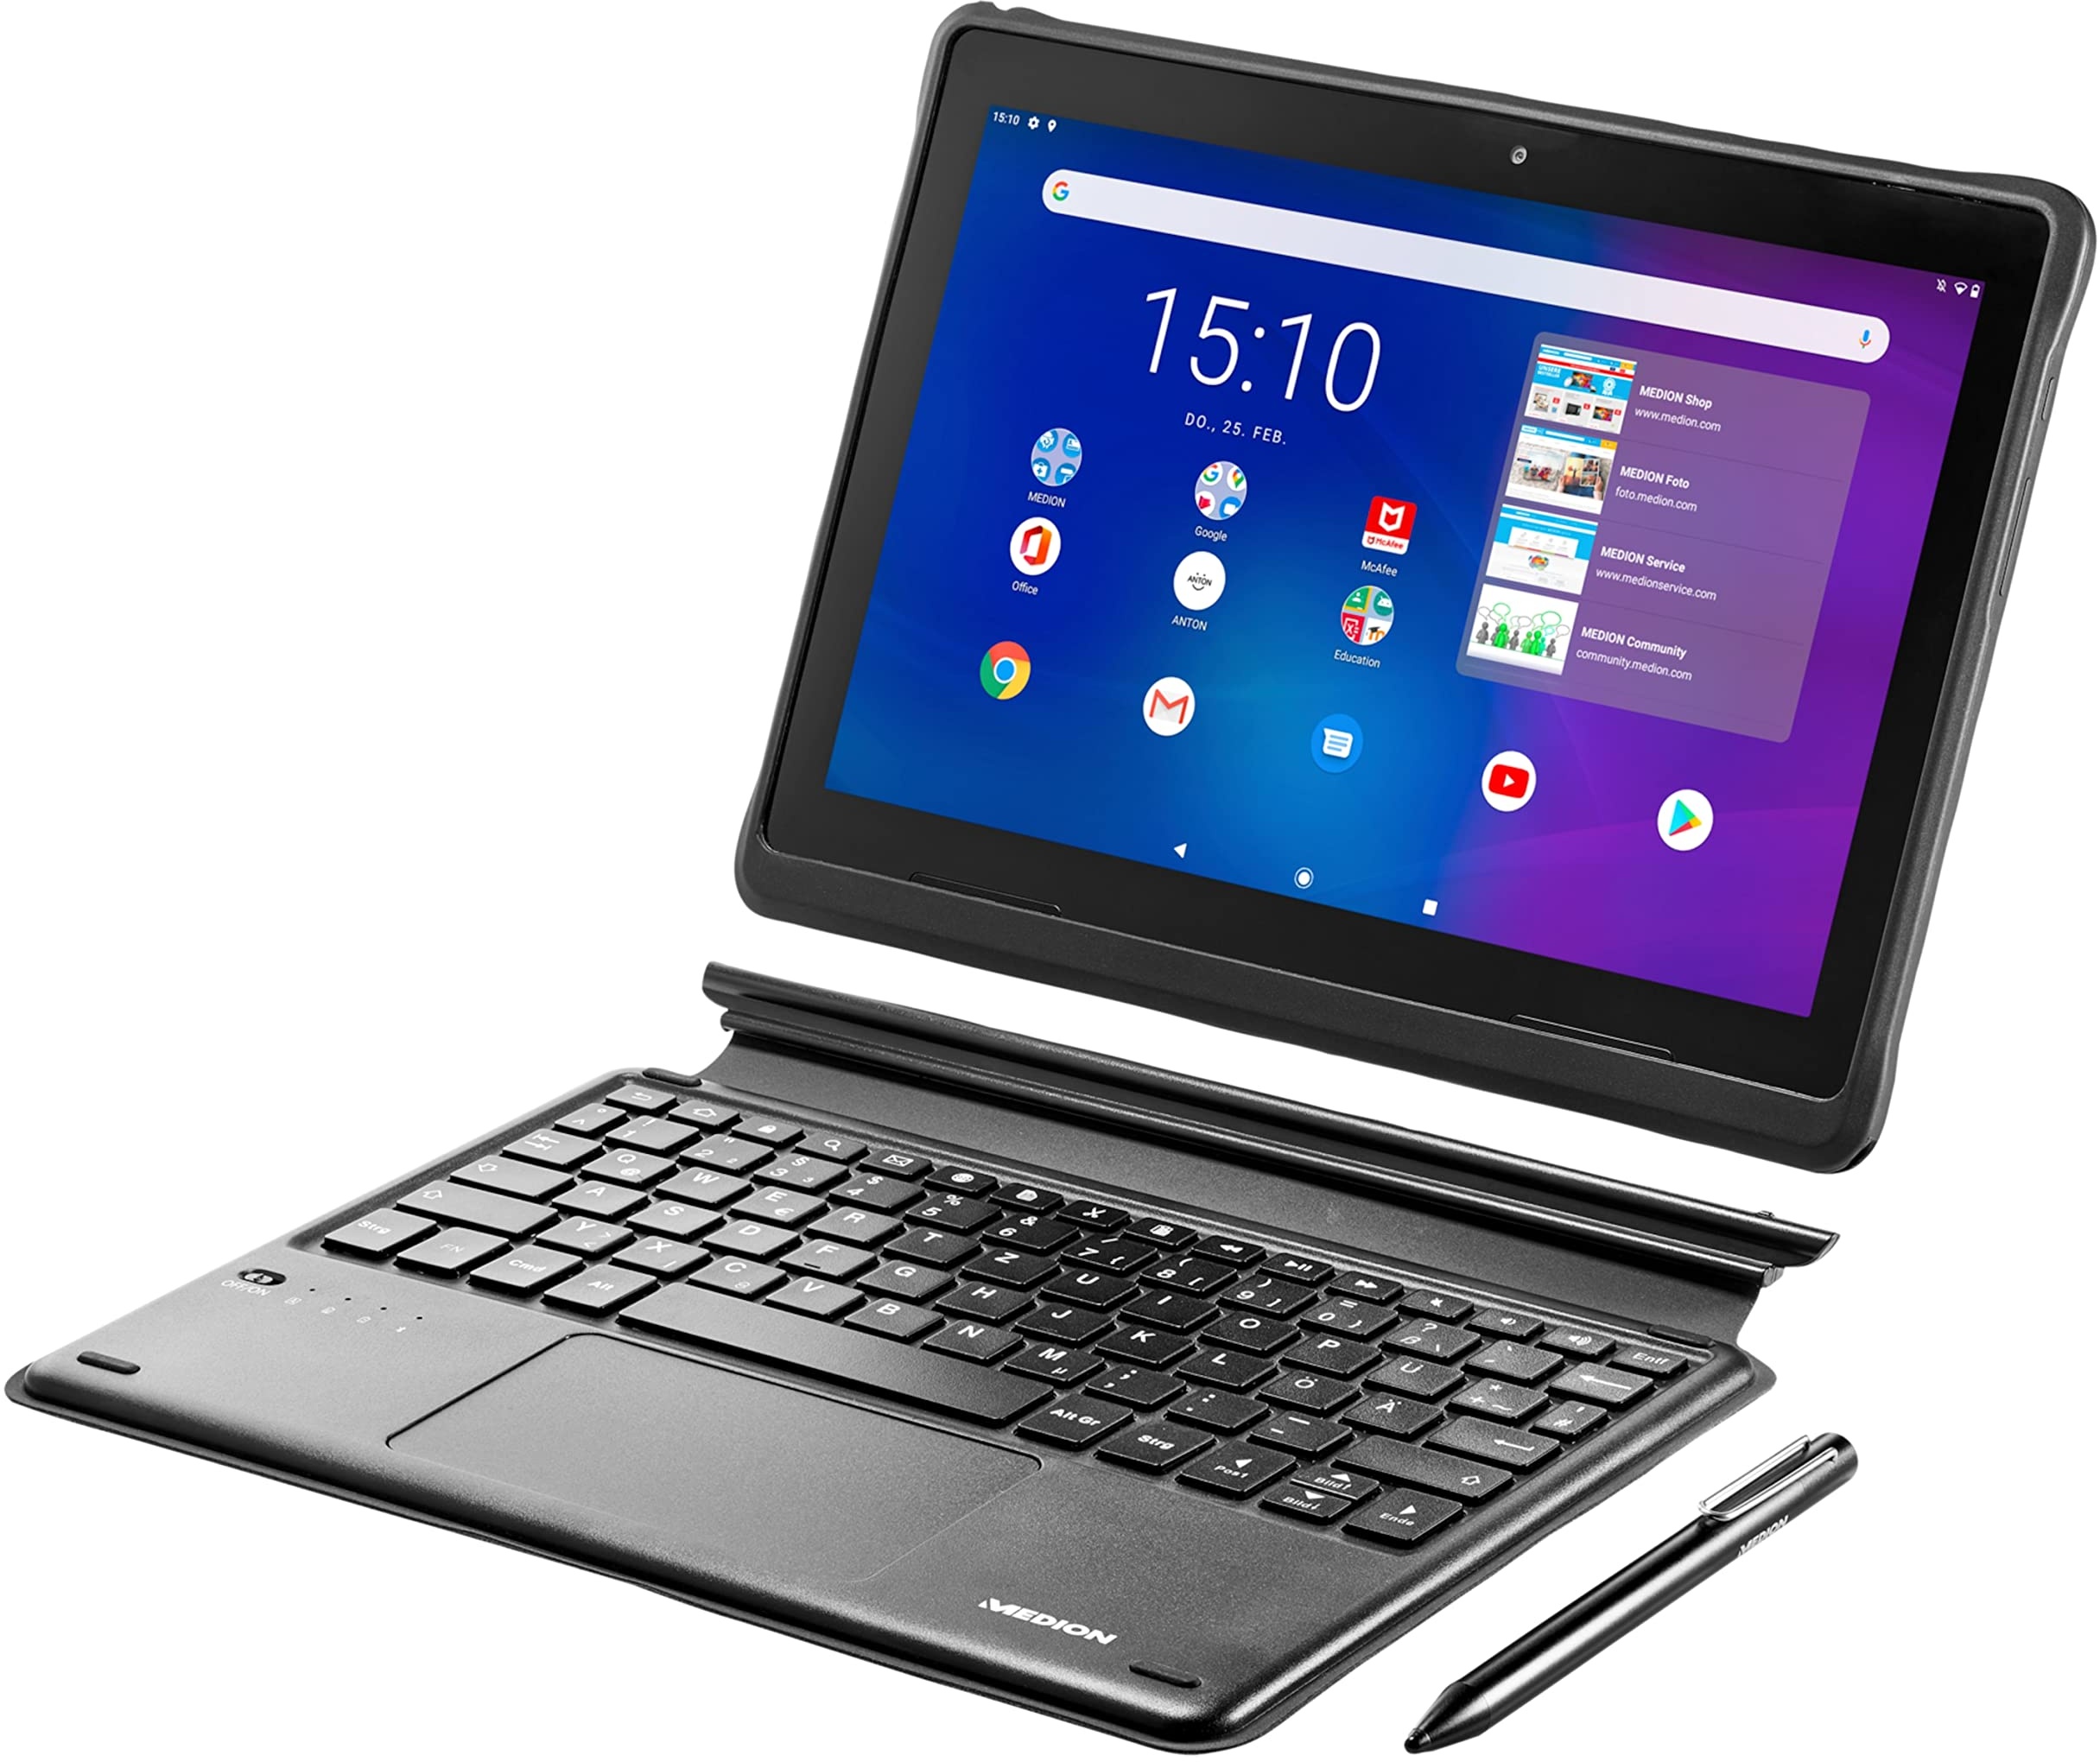 MEDION E10900 25,5 cm (10 Zoll) Full HD Tablet inklusive Tastatur (LTE, Android 10, Quad Core Prozessor, USB Typ C, 3GB RAM, 32GB Speicher, WLAN, Bluetooth, 8MP Kamera) schwarz